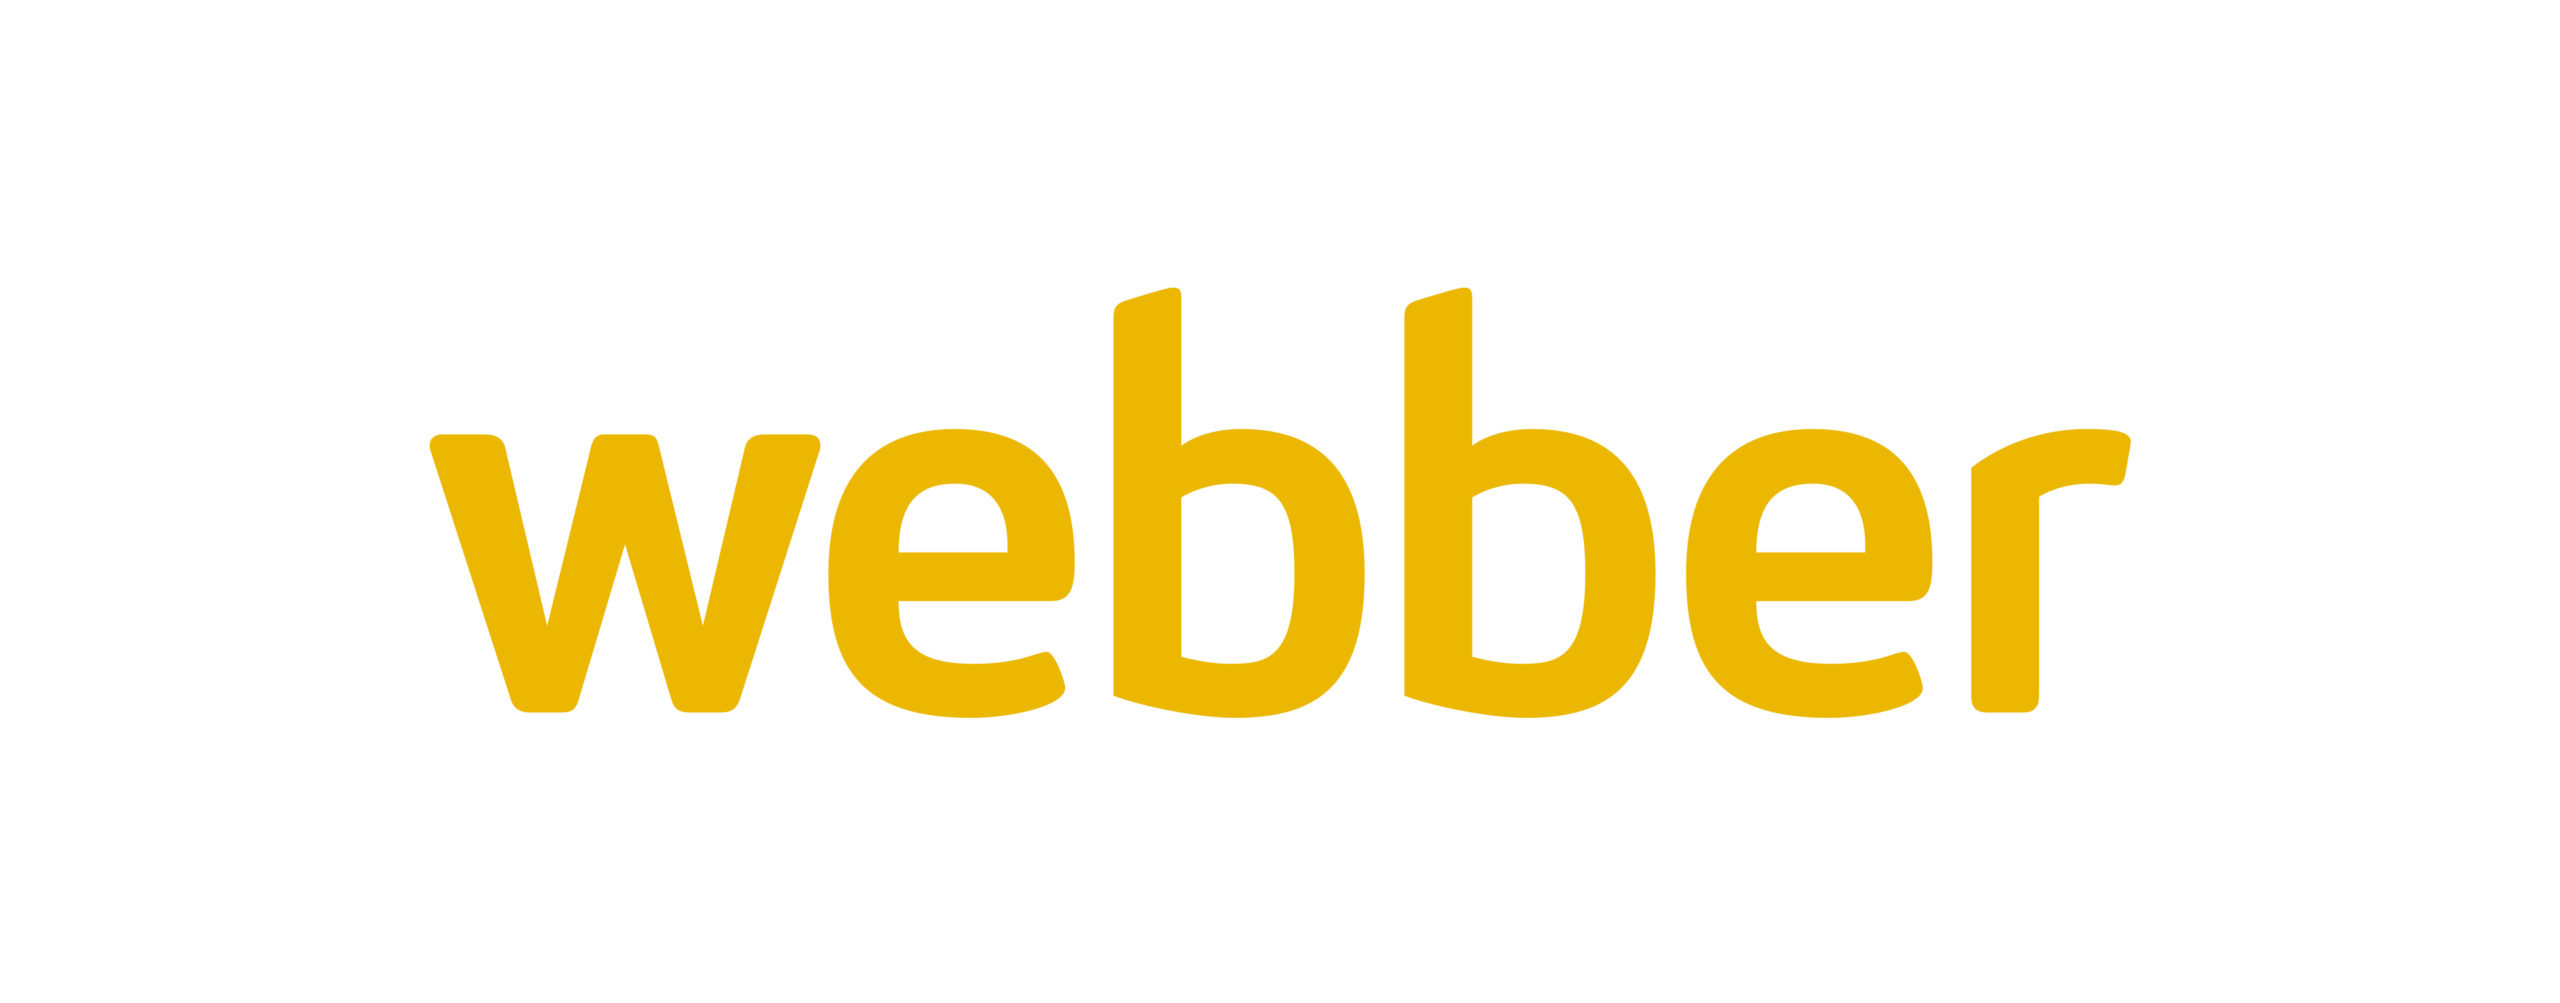 Webber logo- yellow